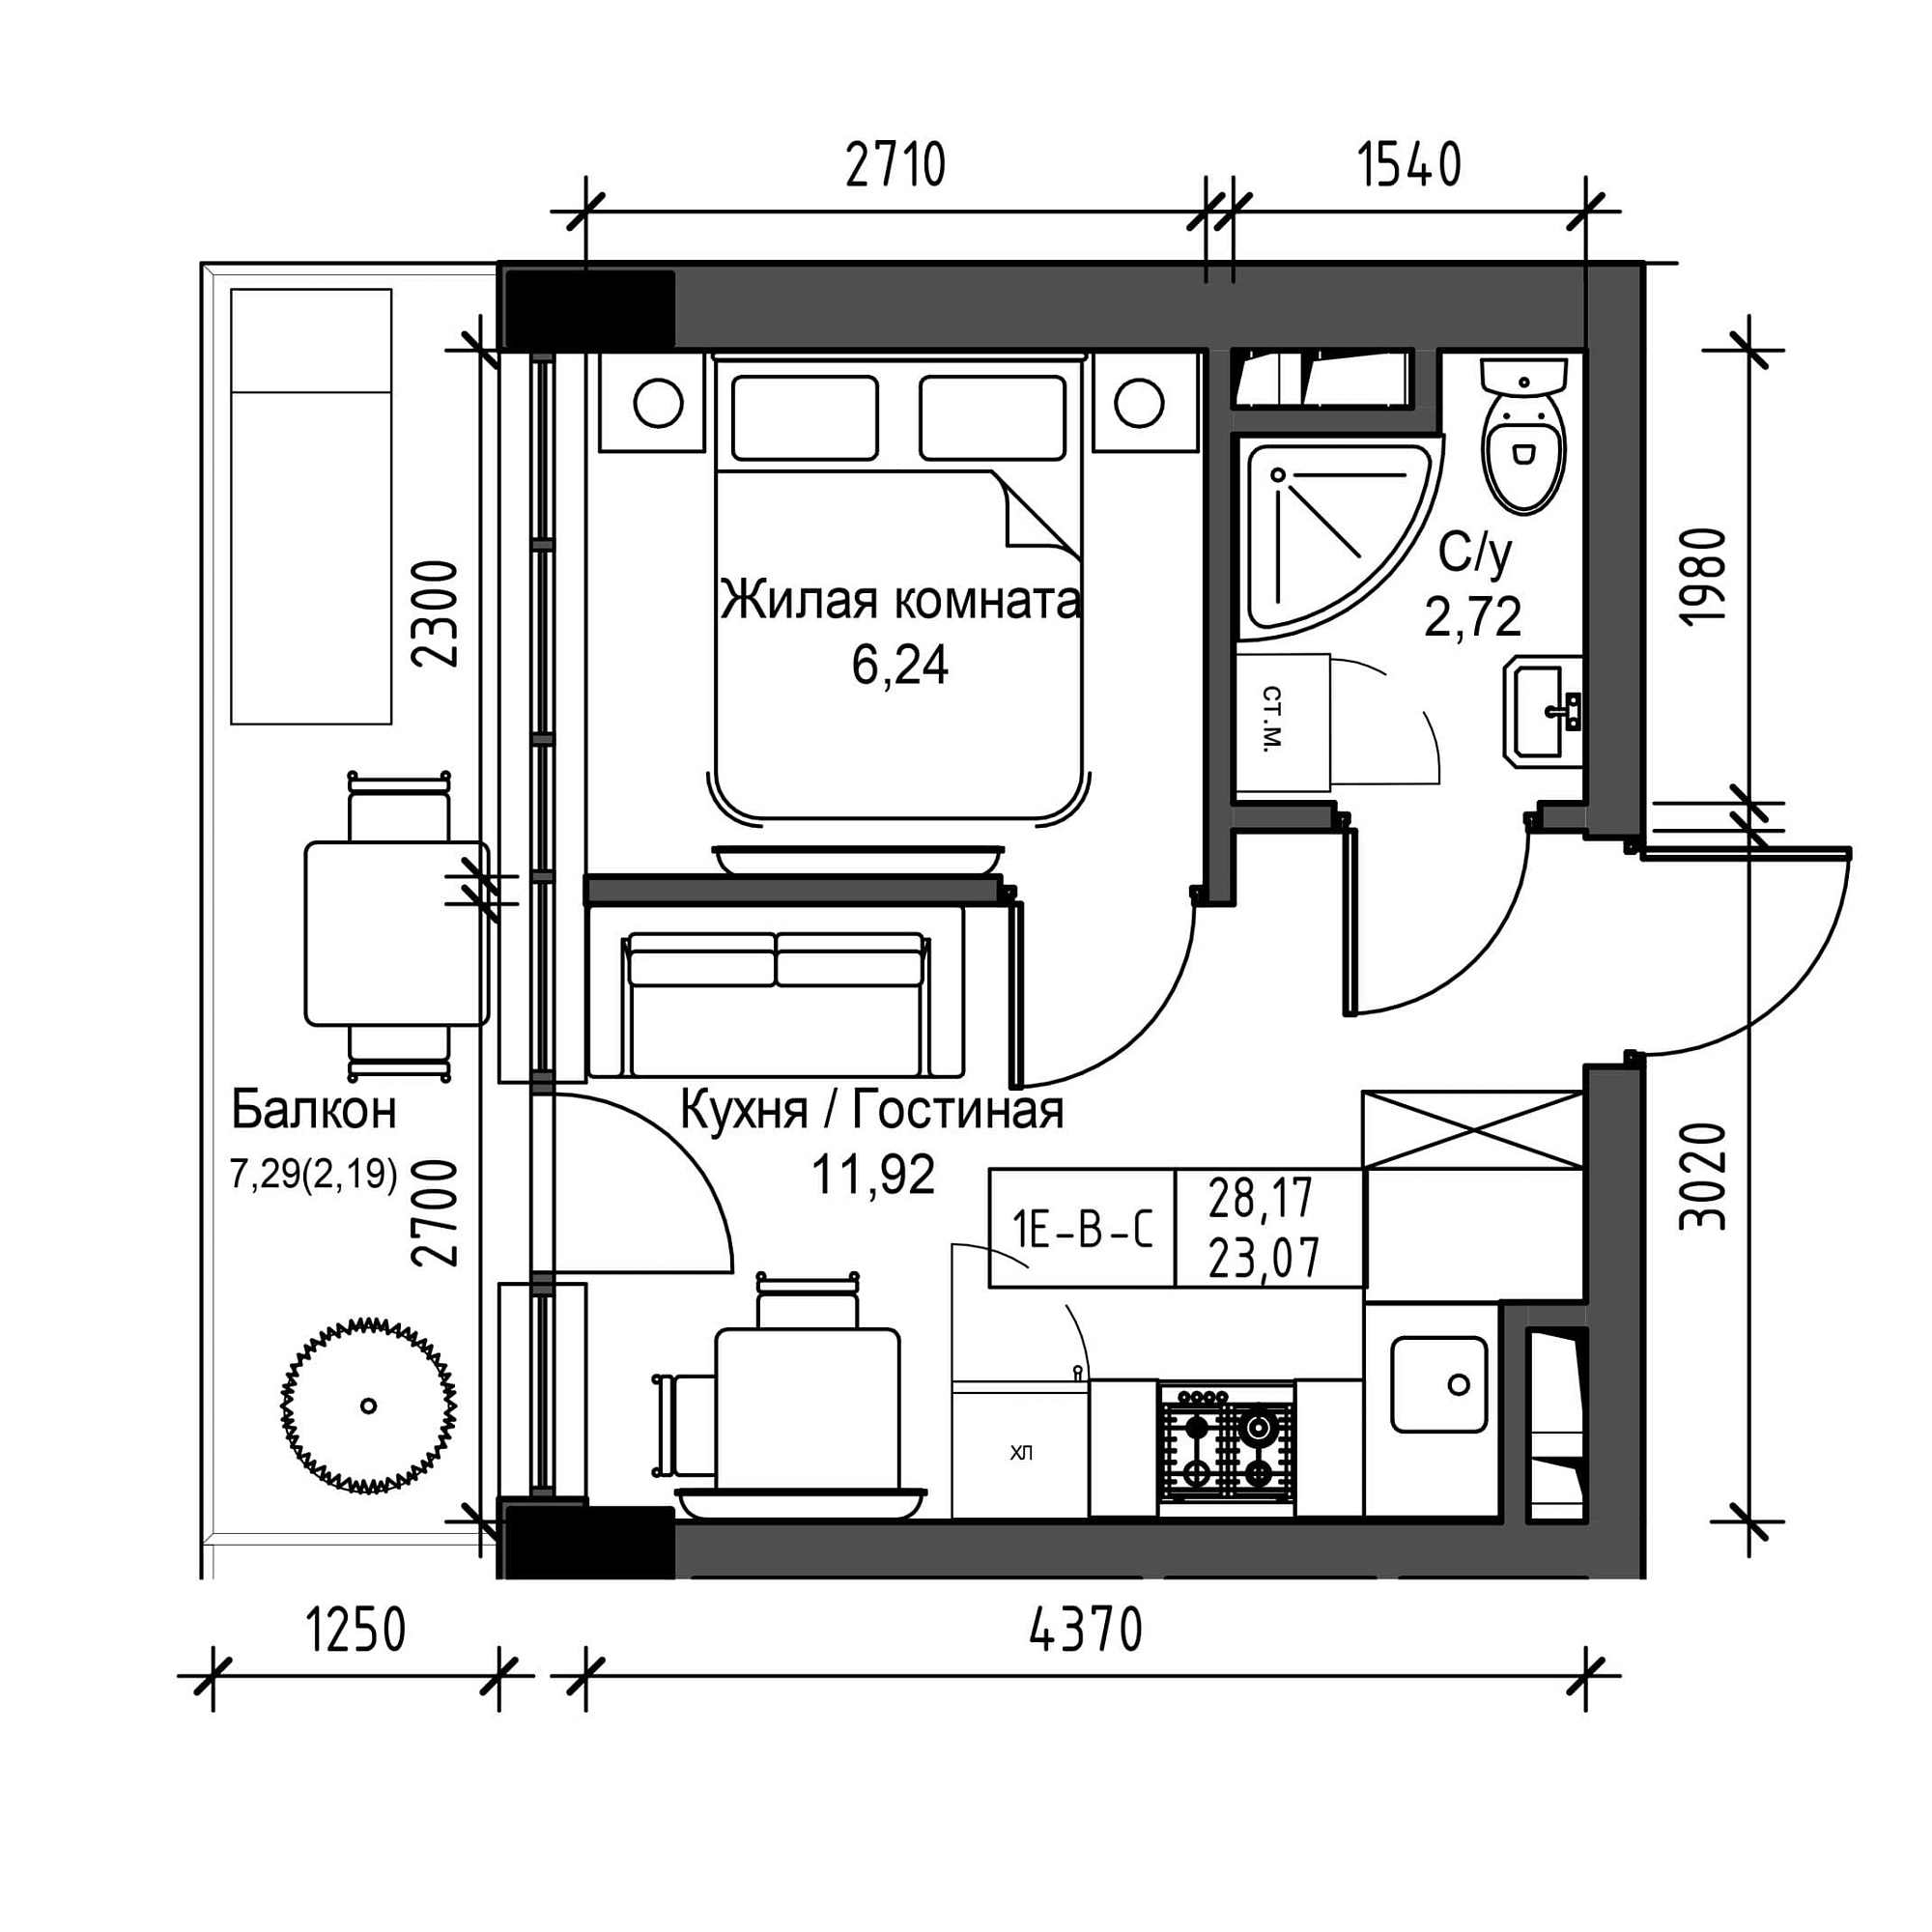 Планування 1-к квартира площею 23.07м2, UM-001-03/0013.